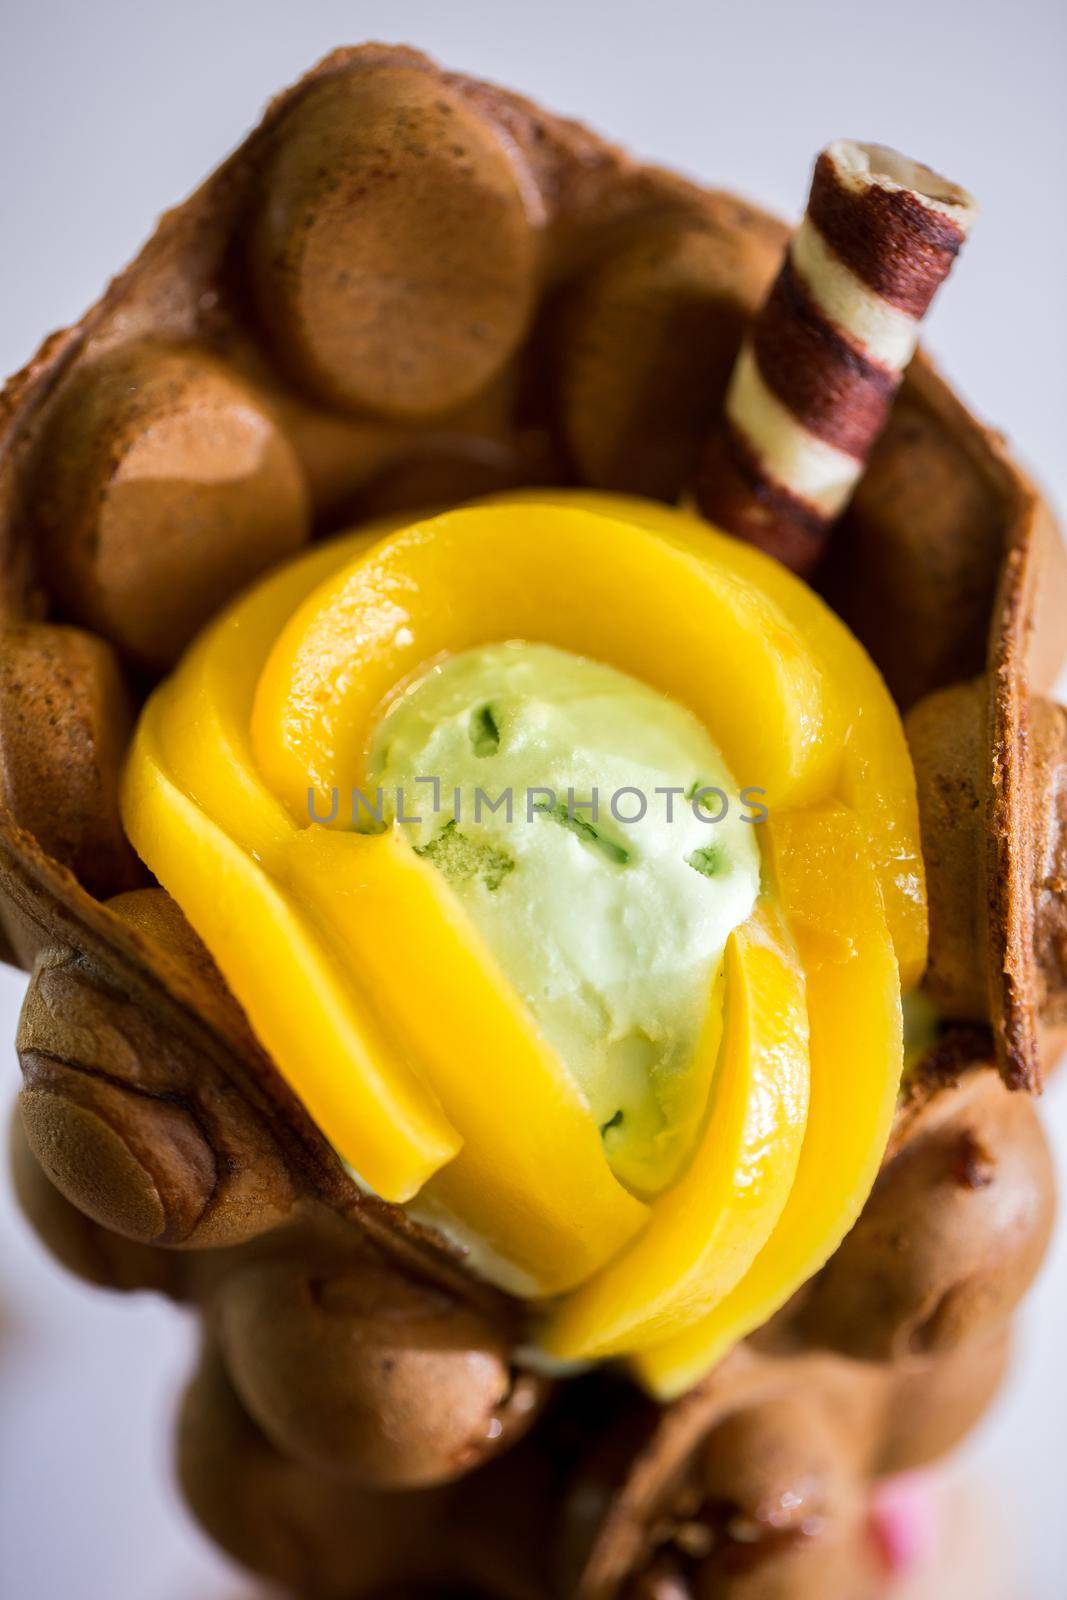 Hong Kong style egg waffle with mango